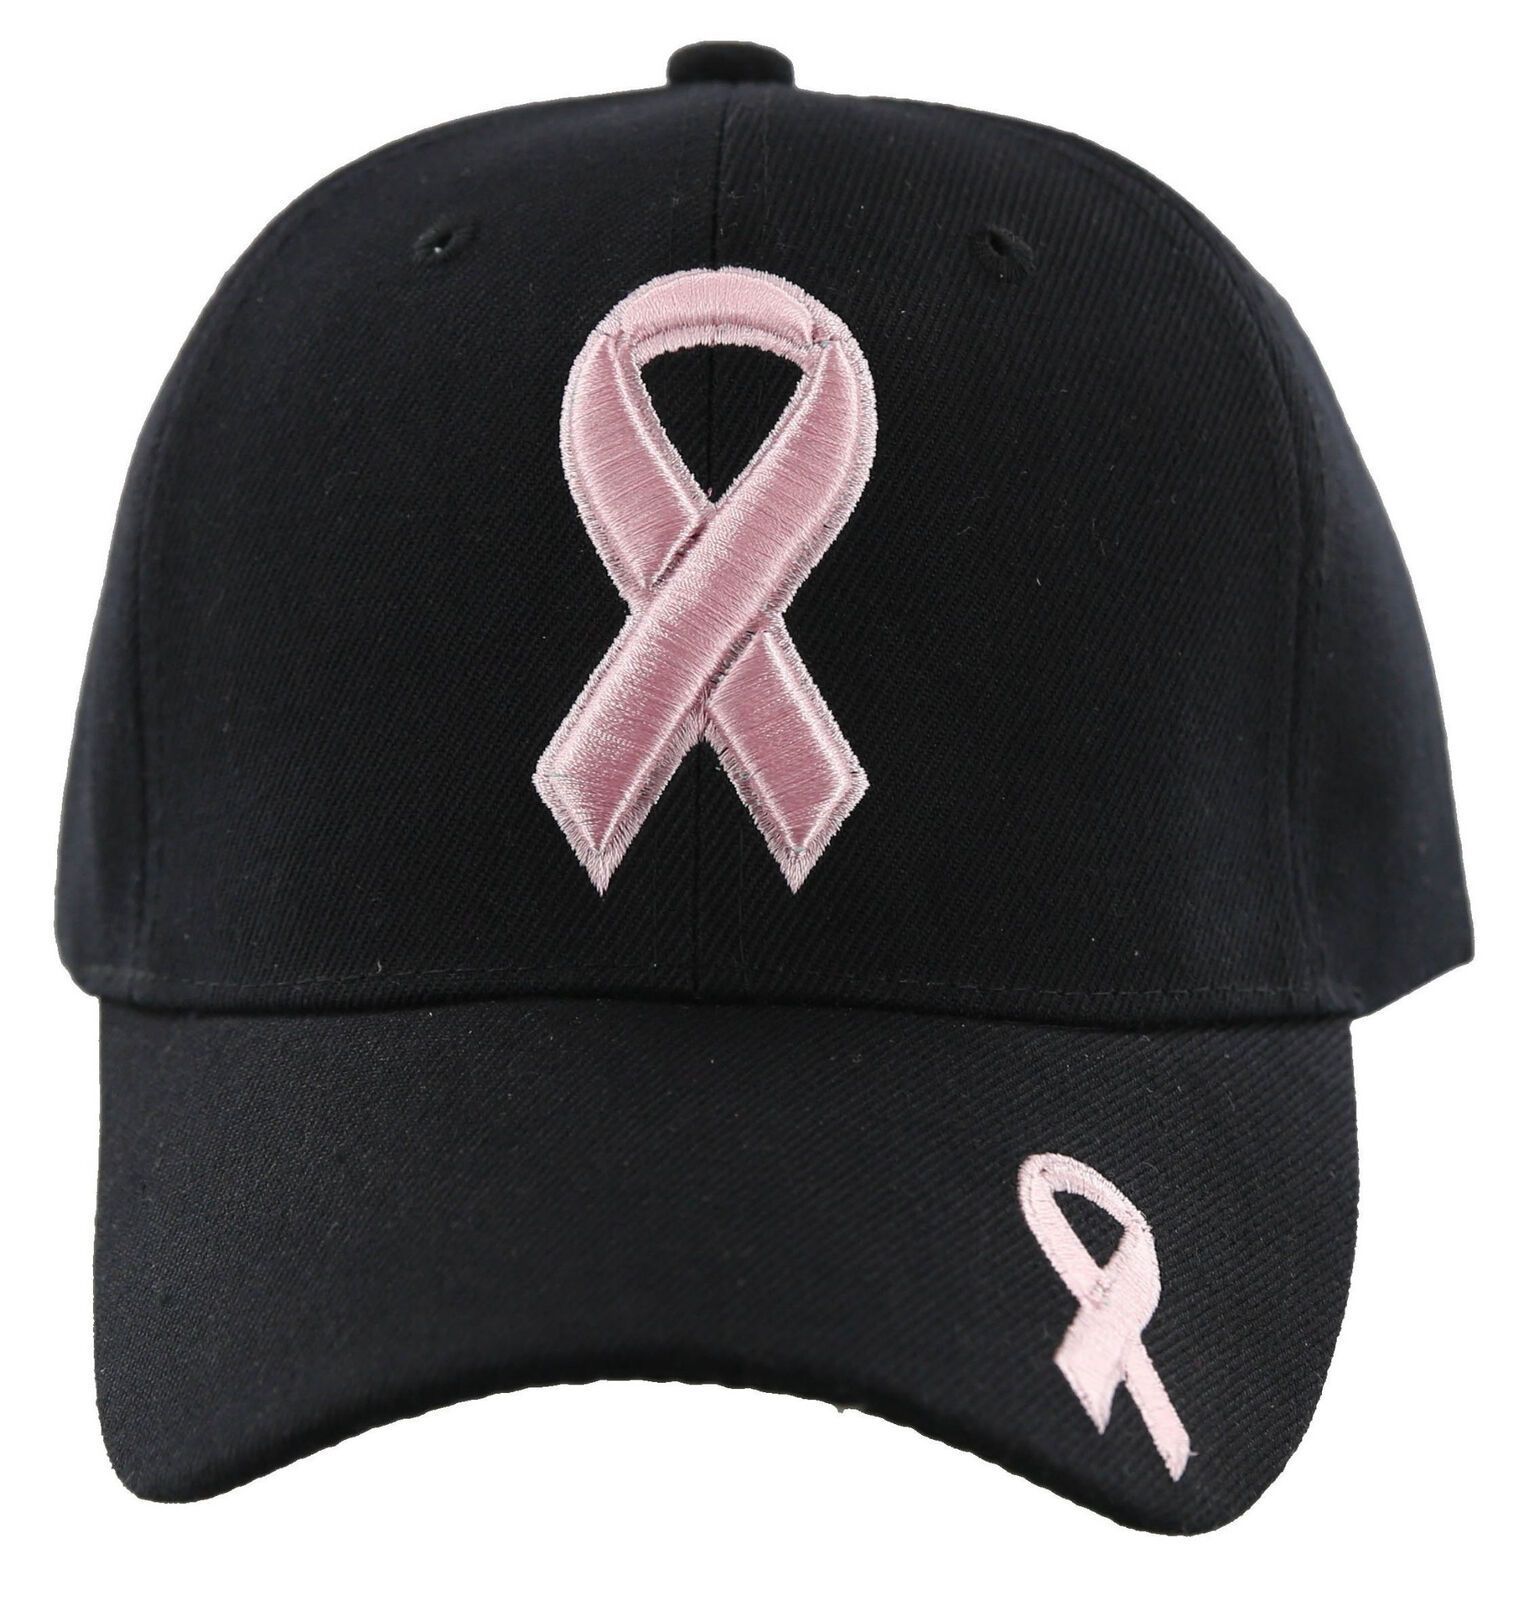 NEW! WOMENS BREAST CANCER PINK RIBBON BALL CAP HAT BLACK - Men's Hats